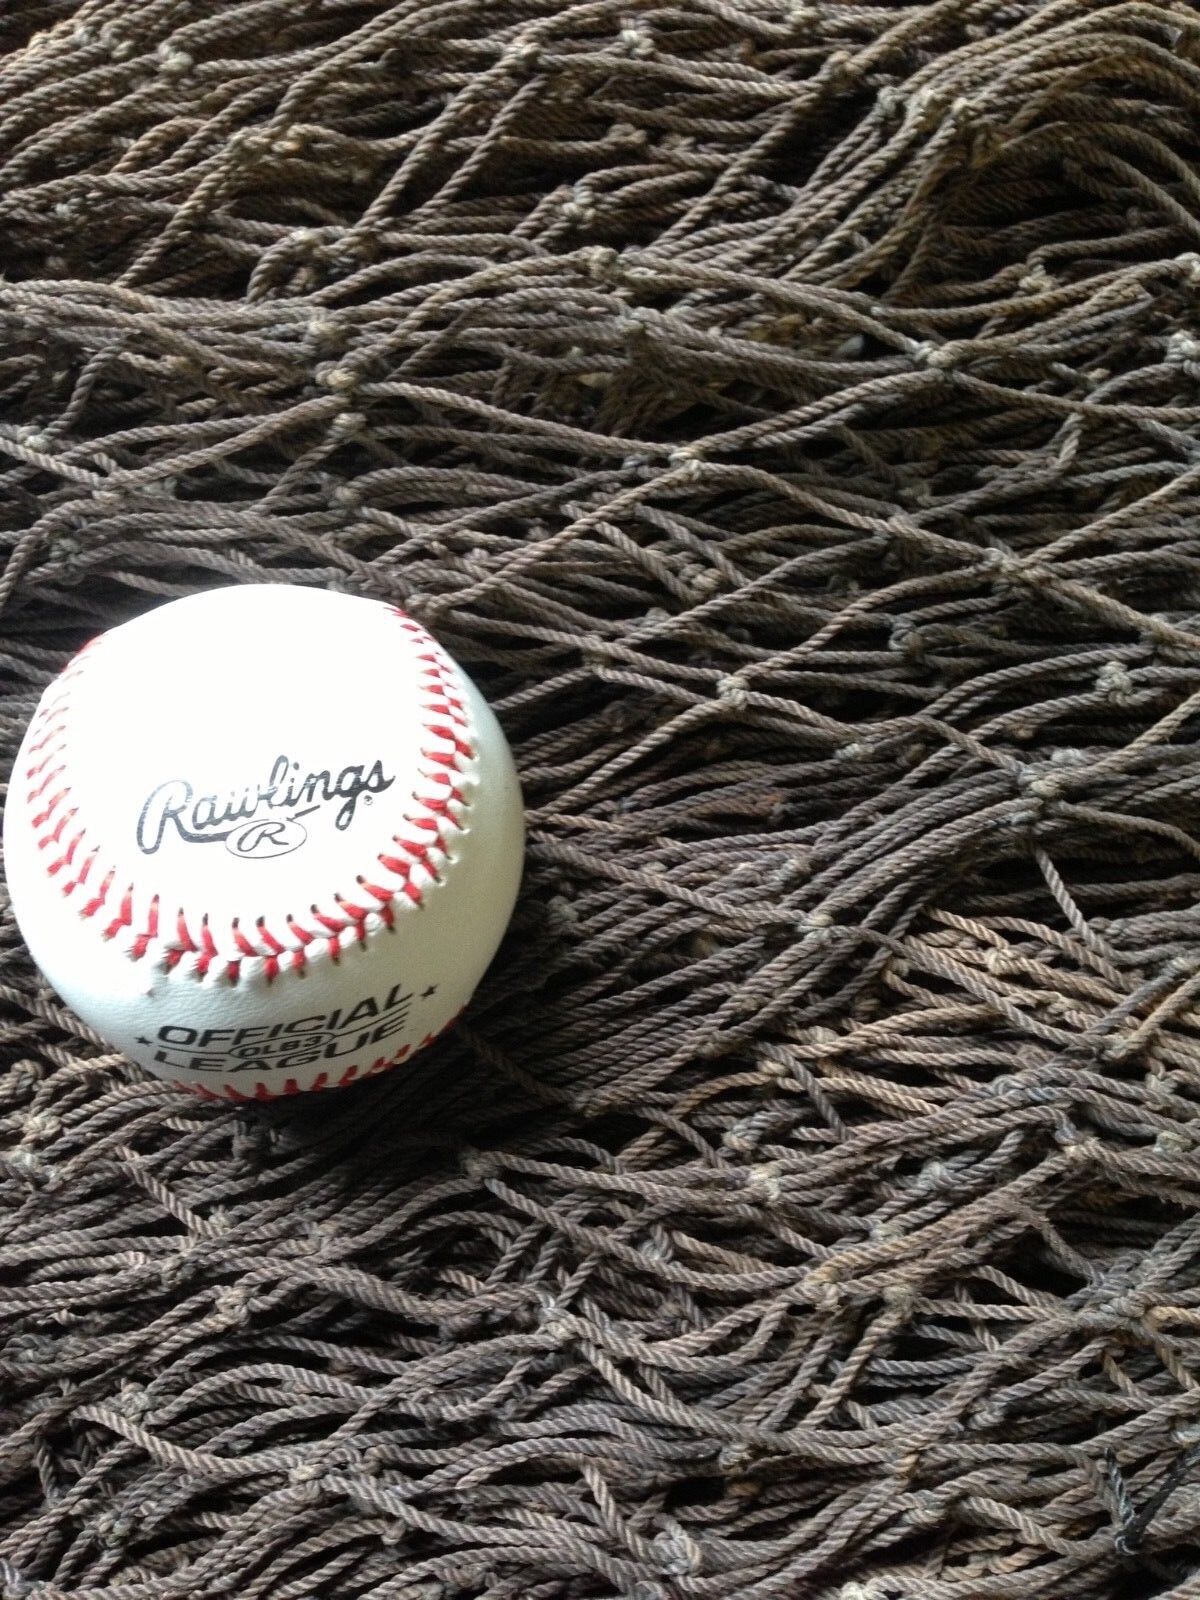  20ft x 15ft Baseball/Softball/Soccer Sporting Net, USED Commercial Fishing Gear DIAMOND Does Not Apply - фотография #4